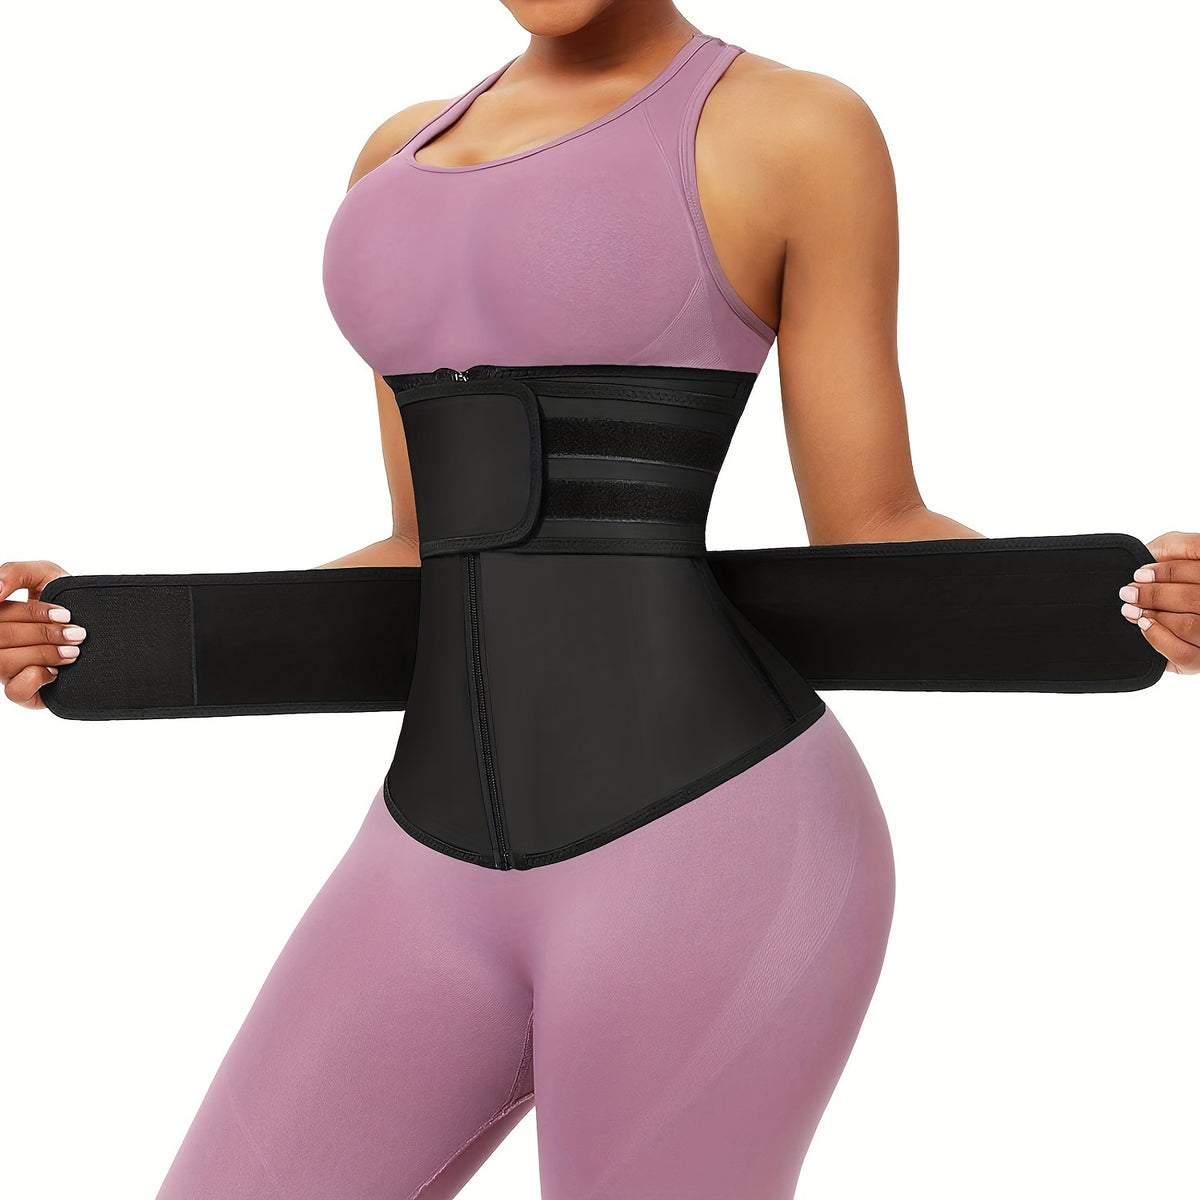 Order A Size Up, Breathable Neoprene Waist Trainer, Trimmer Belt, Body Shapewear For Women Cykapu